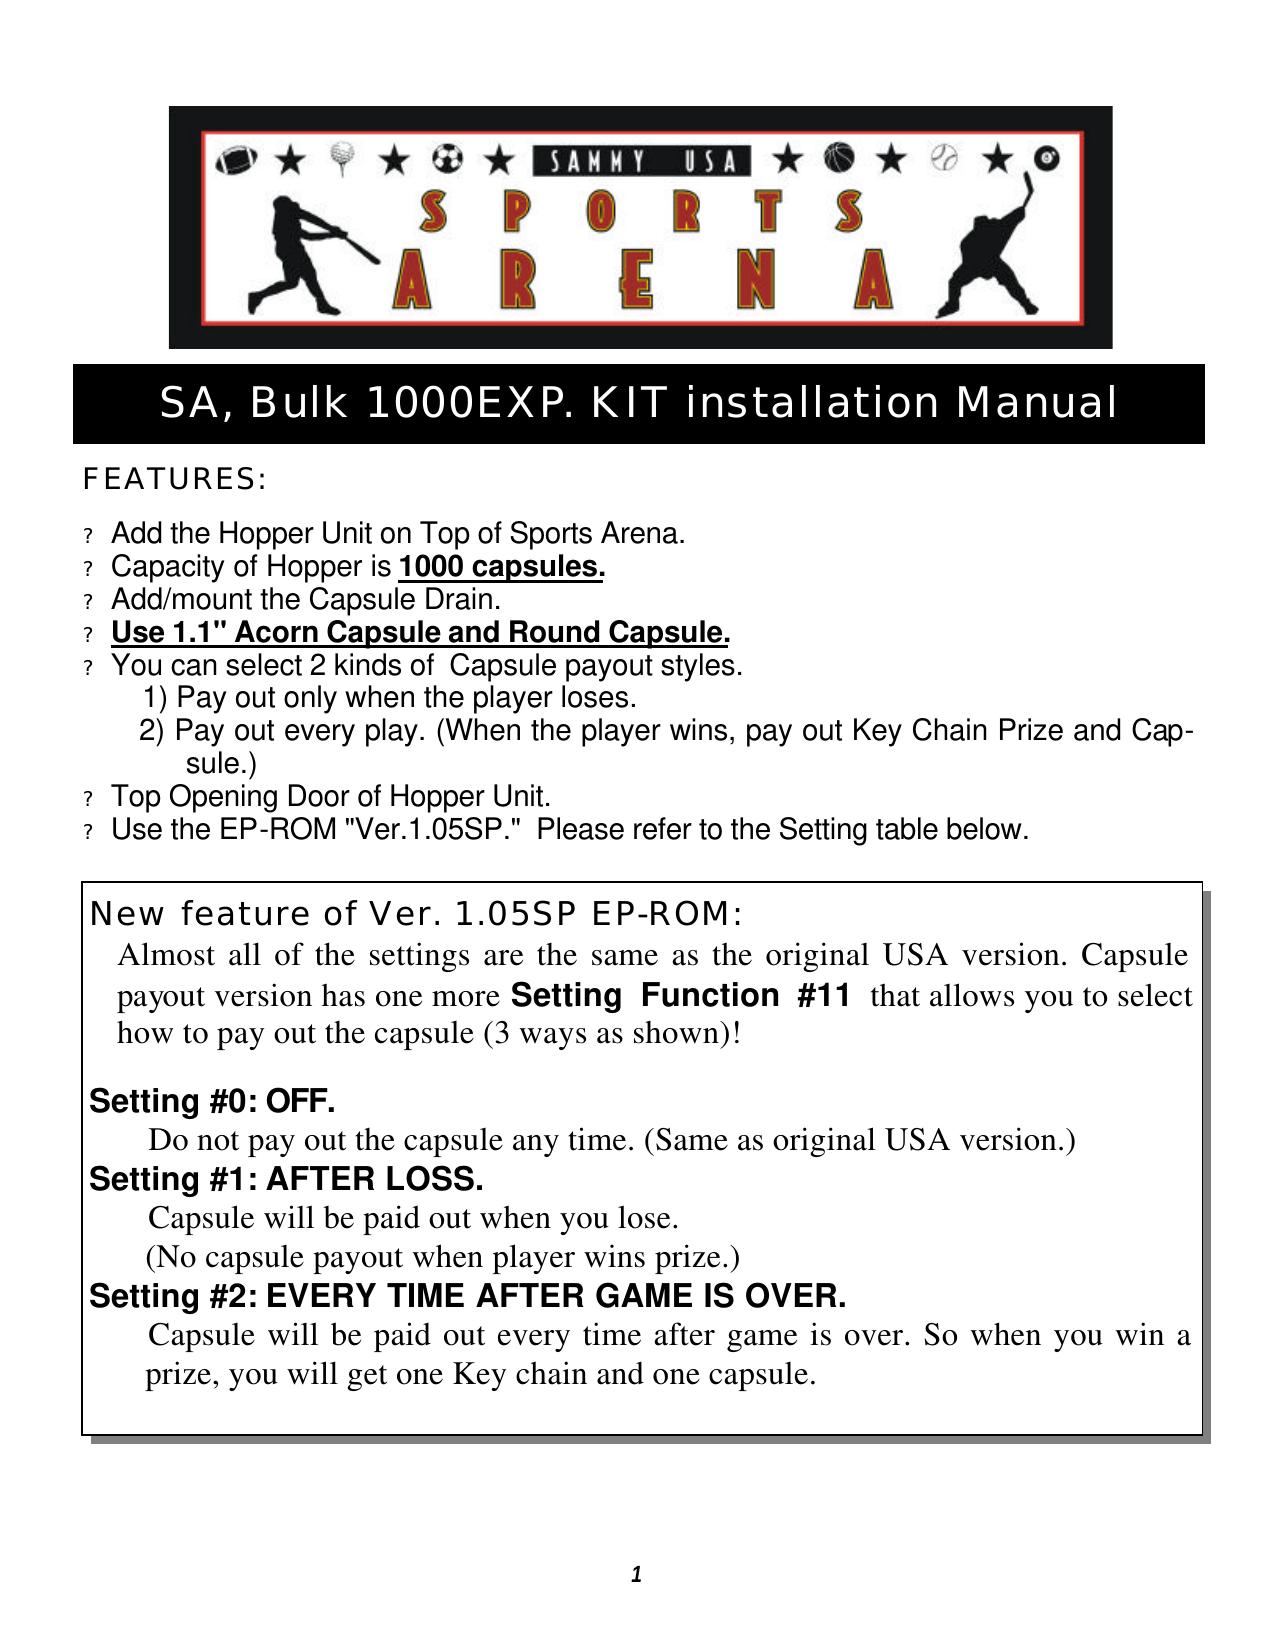 040901 SA Bulk 1000EXP KIT Manual.pub